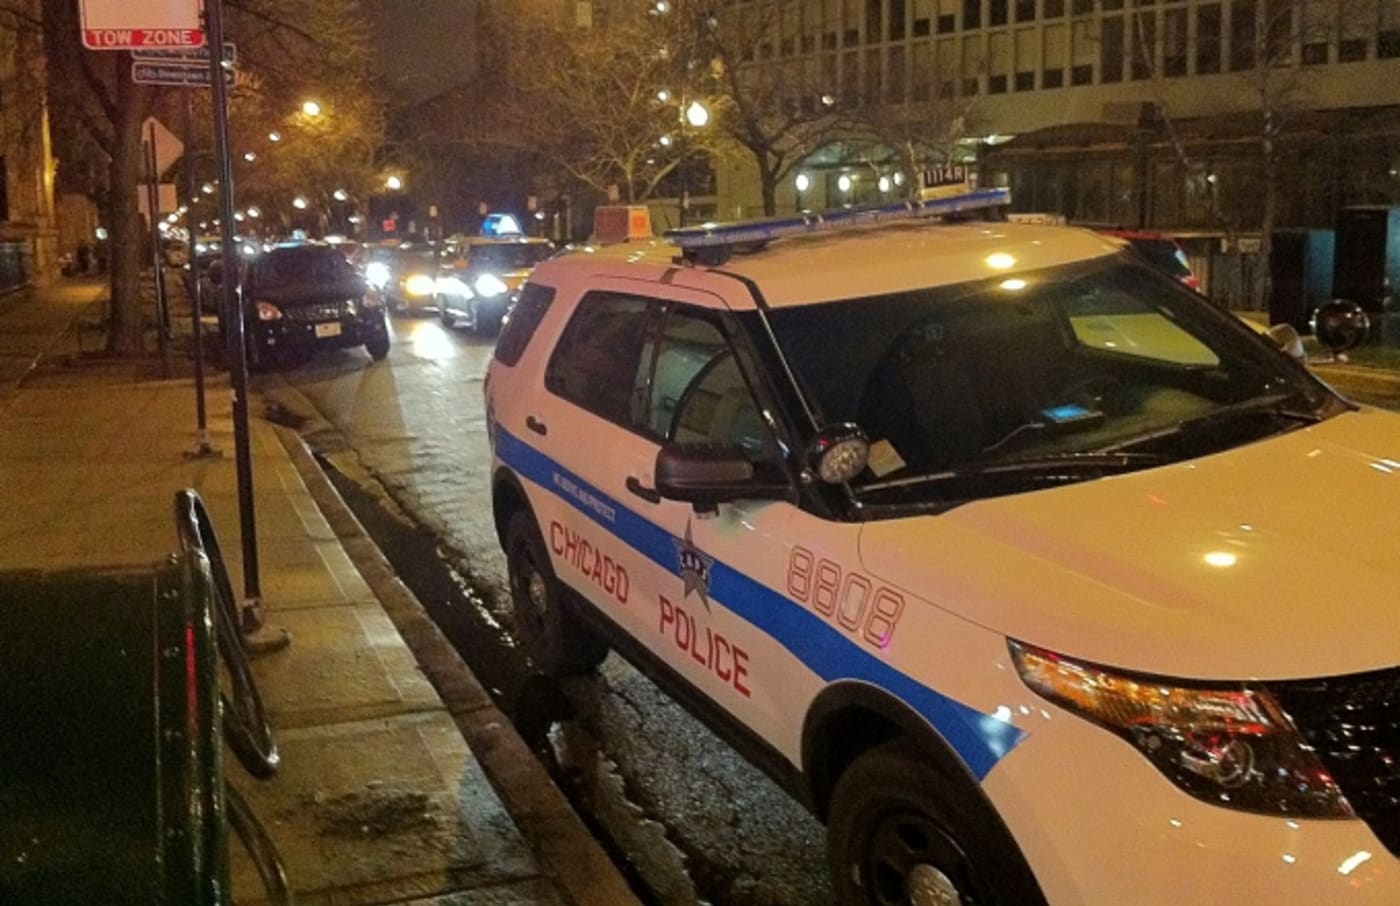 Chicago Police Car